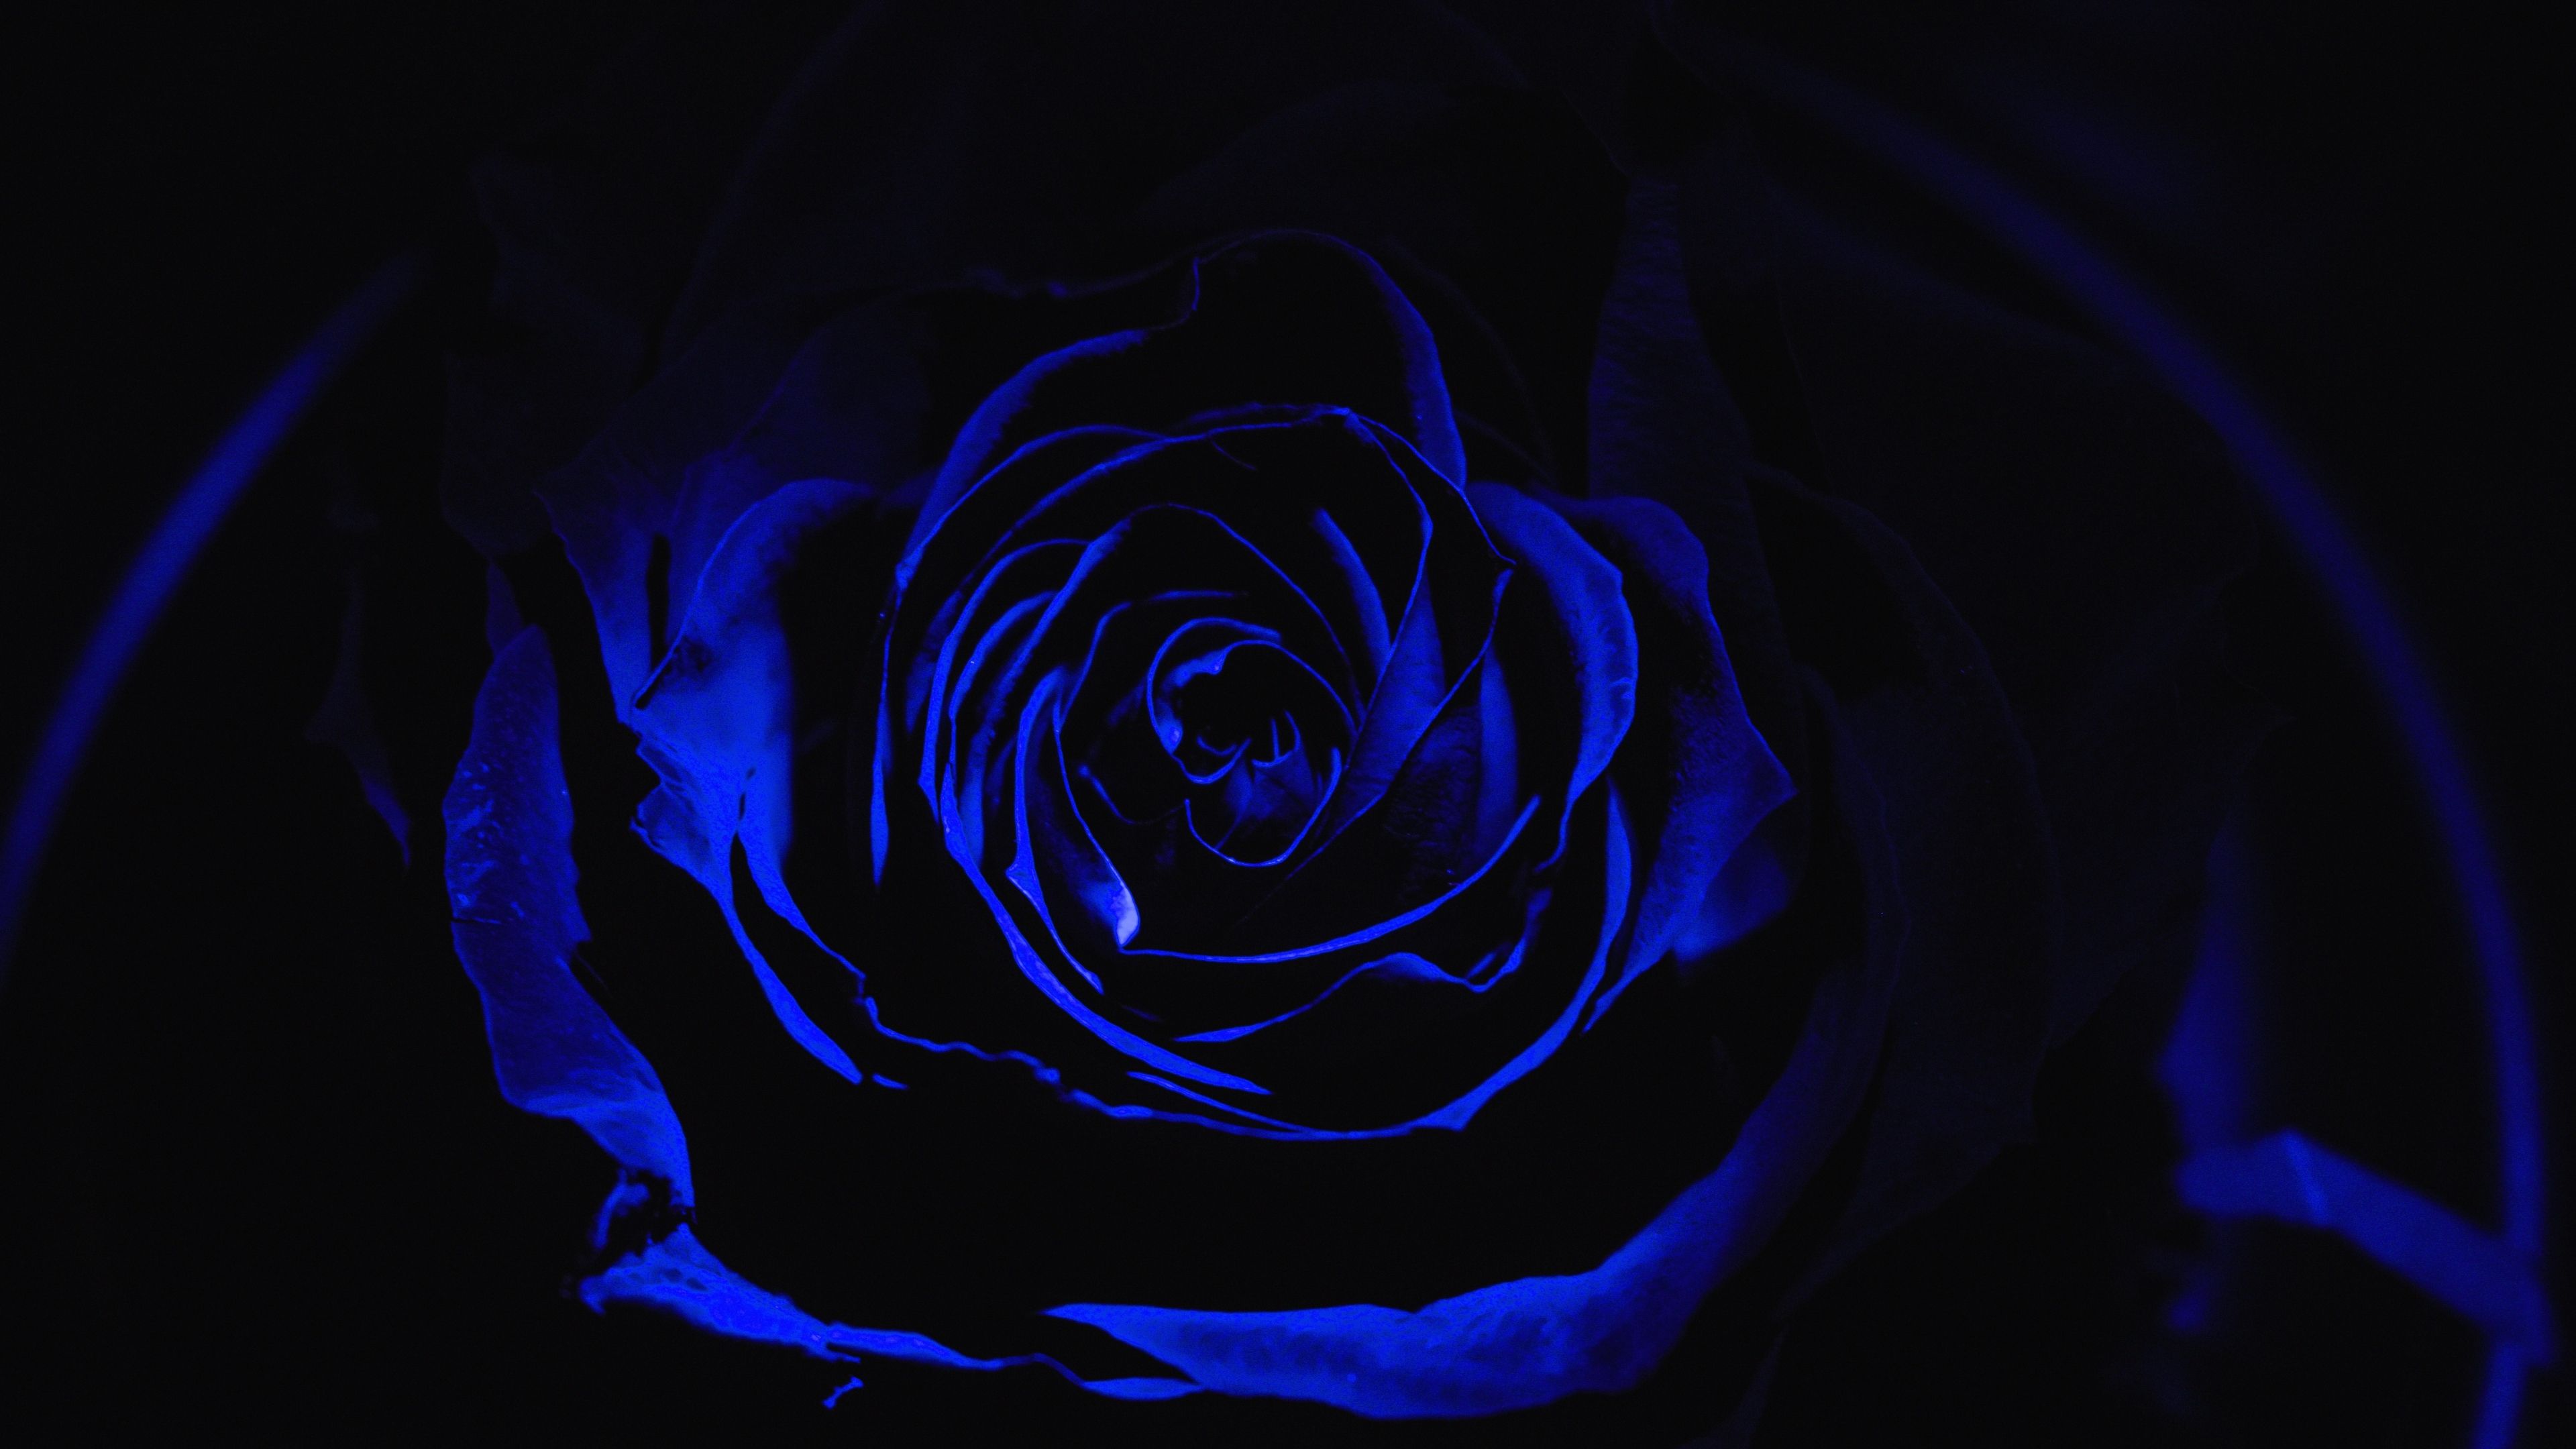 Download 3840x2160 wallpaper blue rose, dark, close up, 4k, uhd 16: widescreen, 3840x2160 HD image, background, 10127